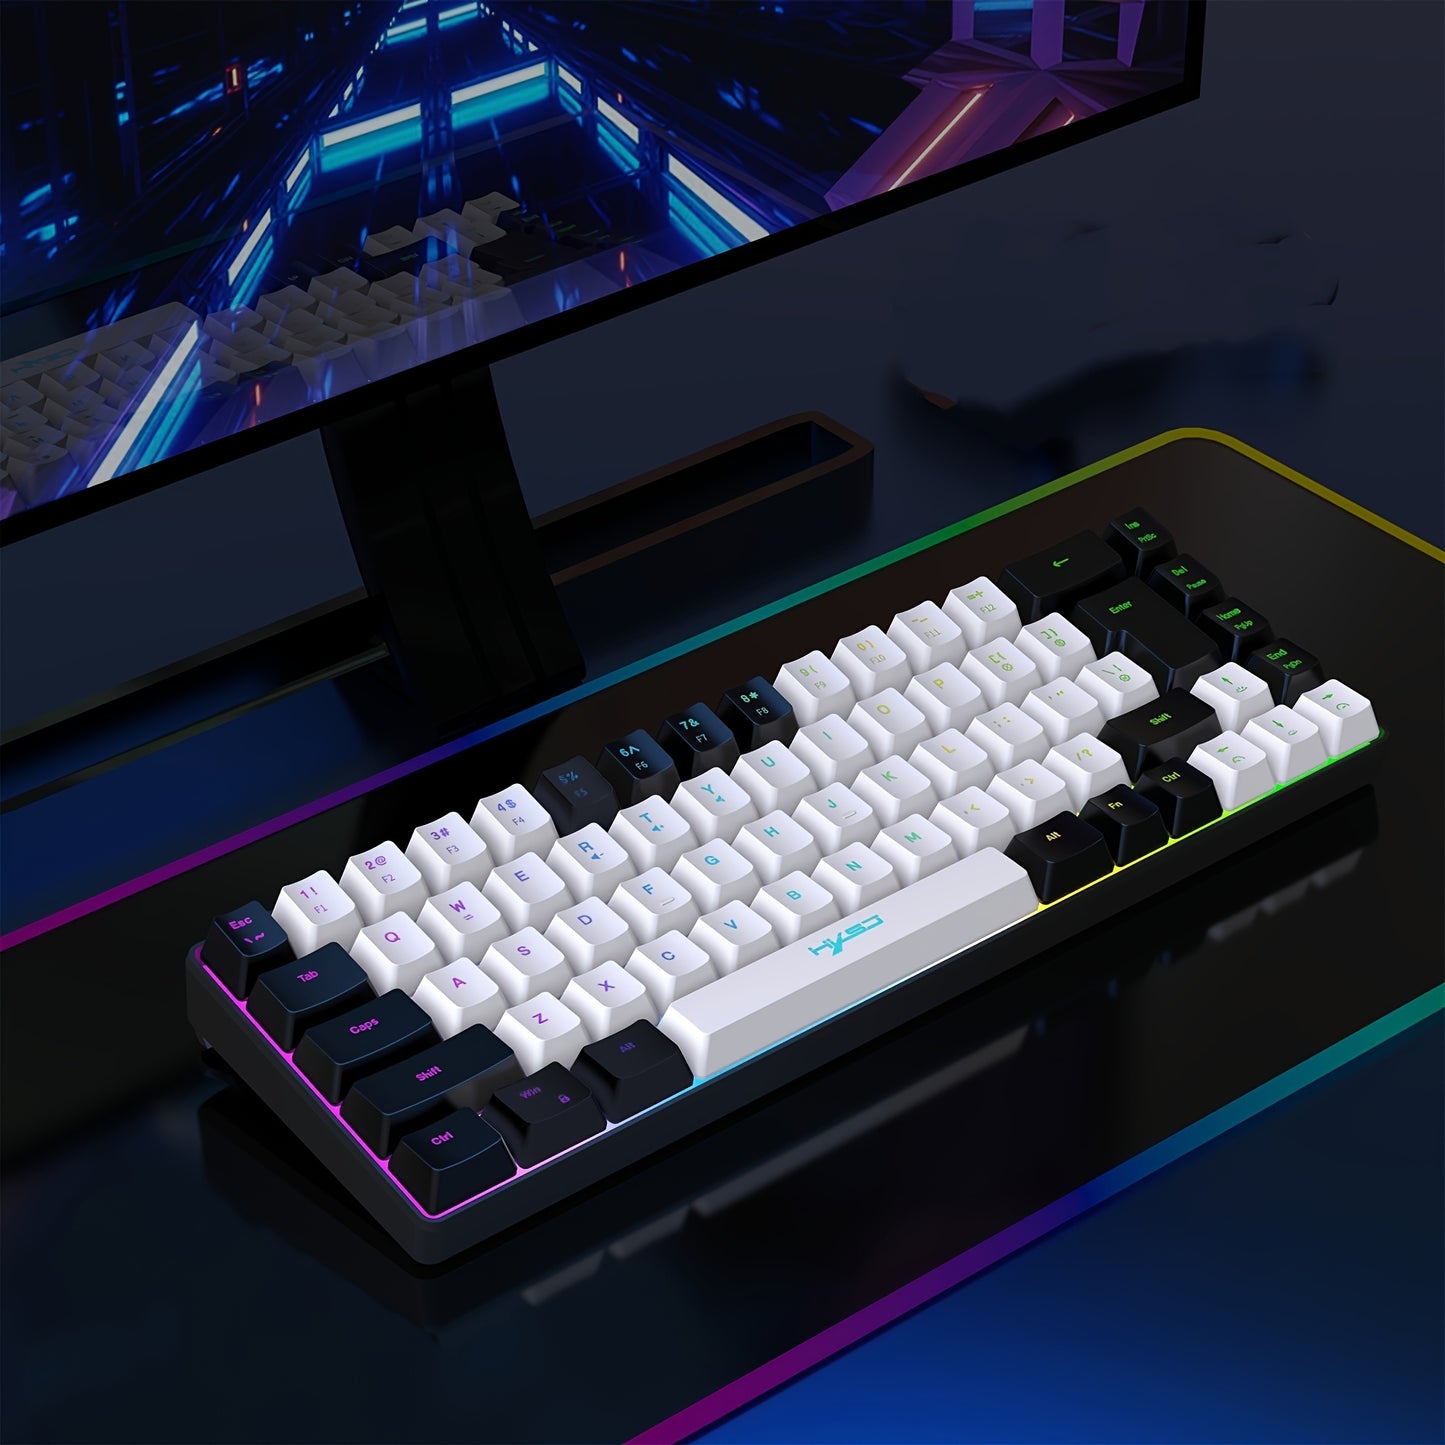 HXSJ- Black & White RGB Keyboard And Cellular Gaming Mouse, Compact 68-key Mini Wired Keyboard RGB Backlit 1000-6400 DPI Mouse, Keyboard And Mouse Gaming PS4 Xbox PC Laptop Mac